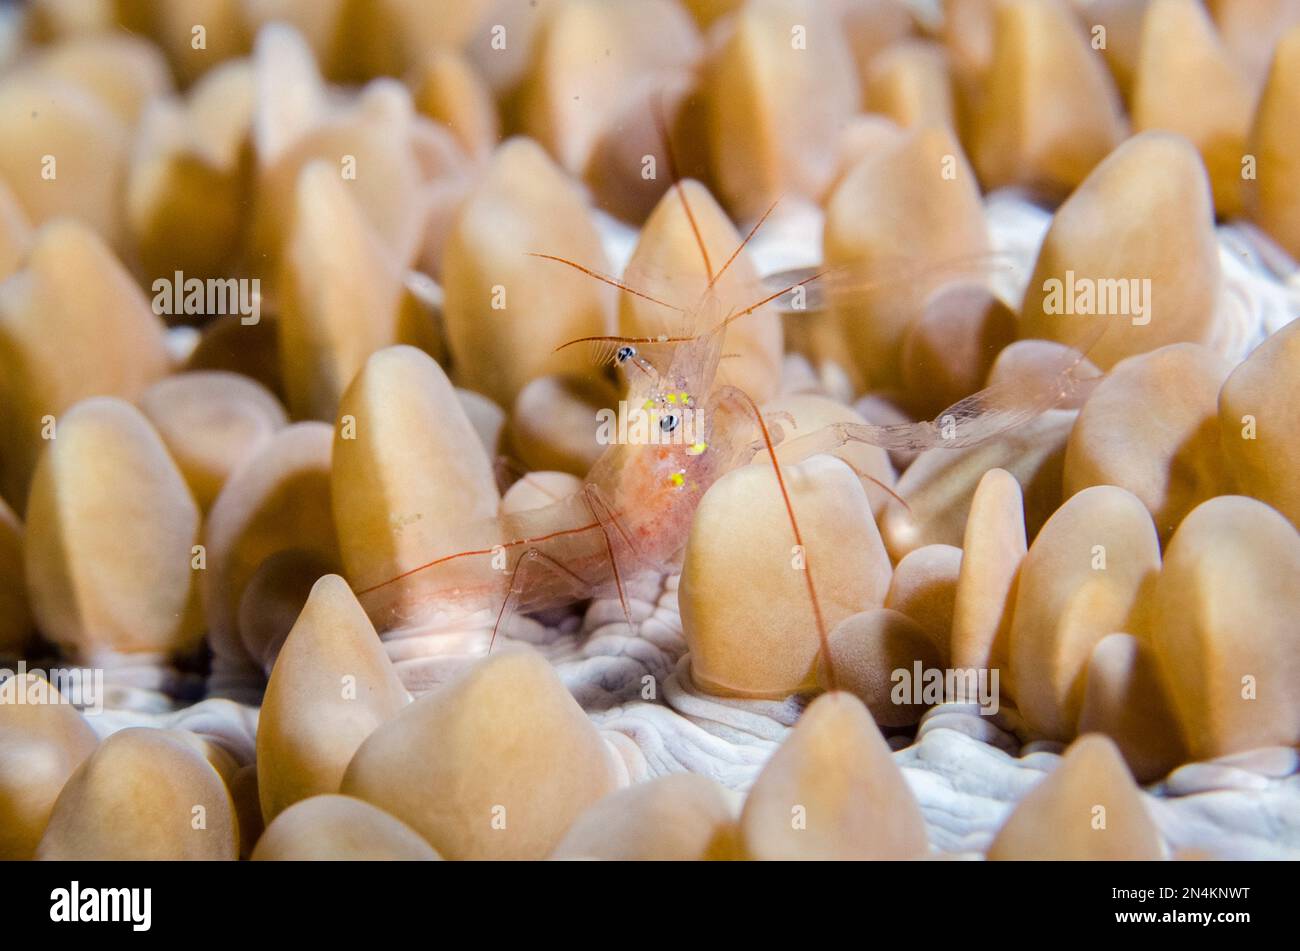 Bubble Coral Shrimp, Vir sp, in Bubble Coral, Plerogyra sinuosa, Weda, Halmahera, North Maluku, Indonesia, Halmahera Sea Stock Photo